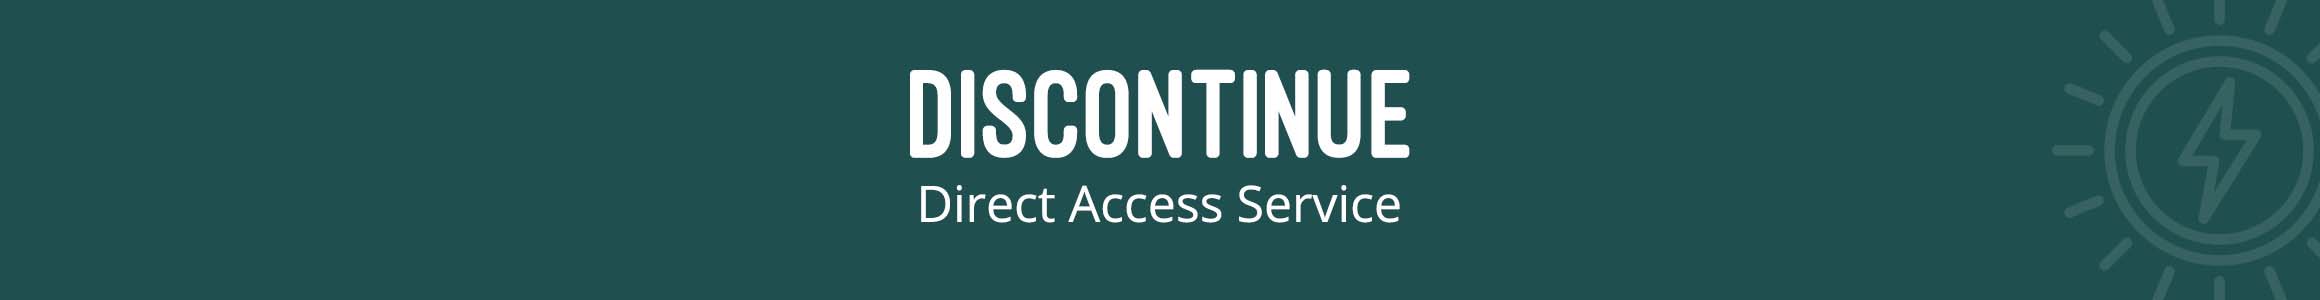 Discontinue Direct Access Service